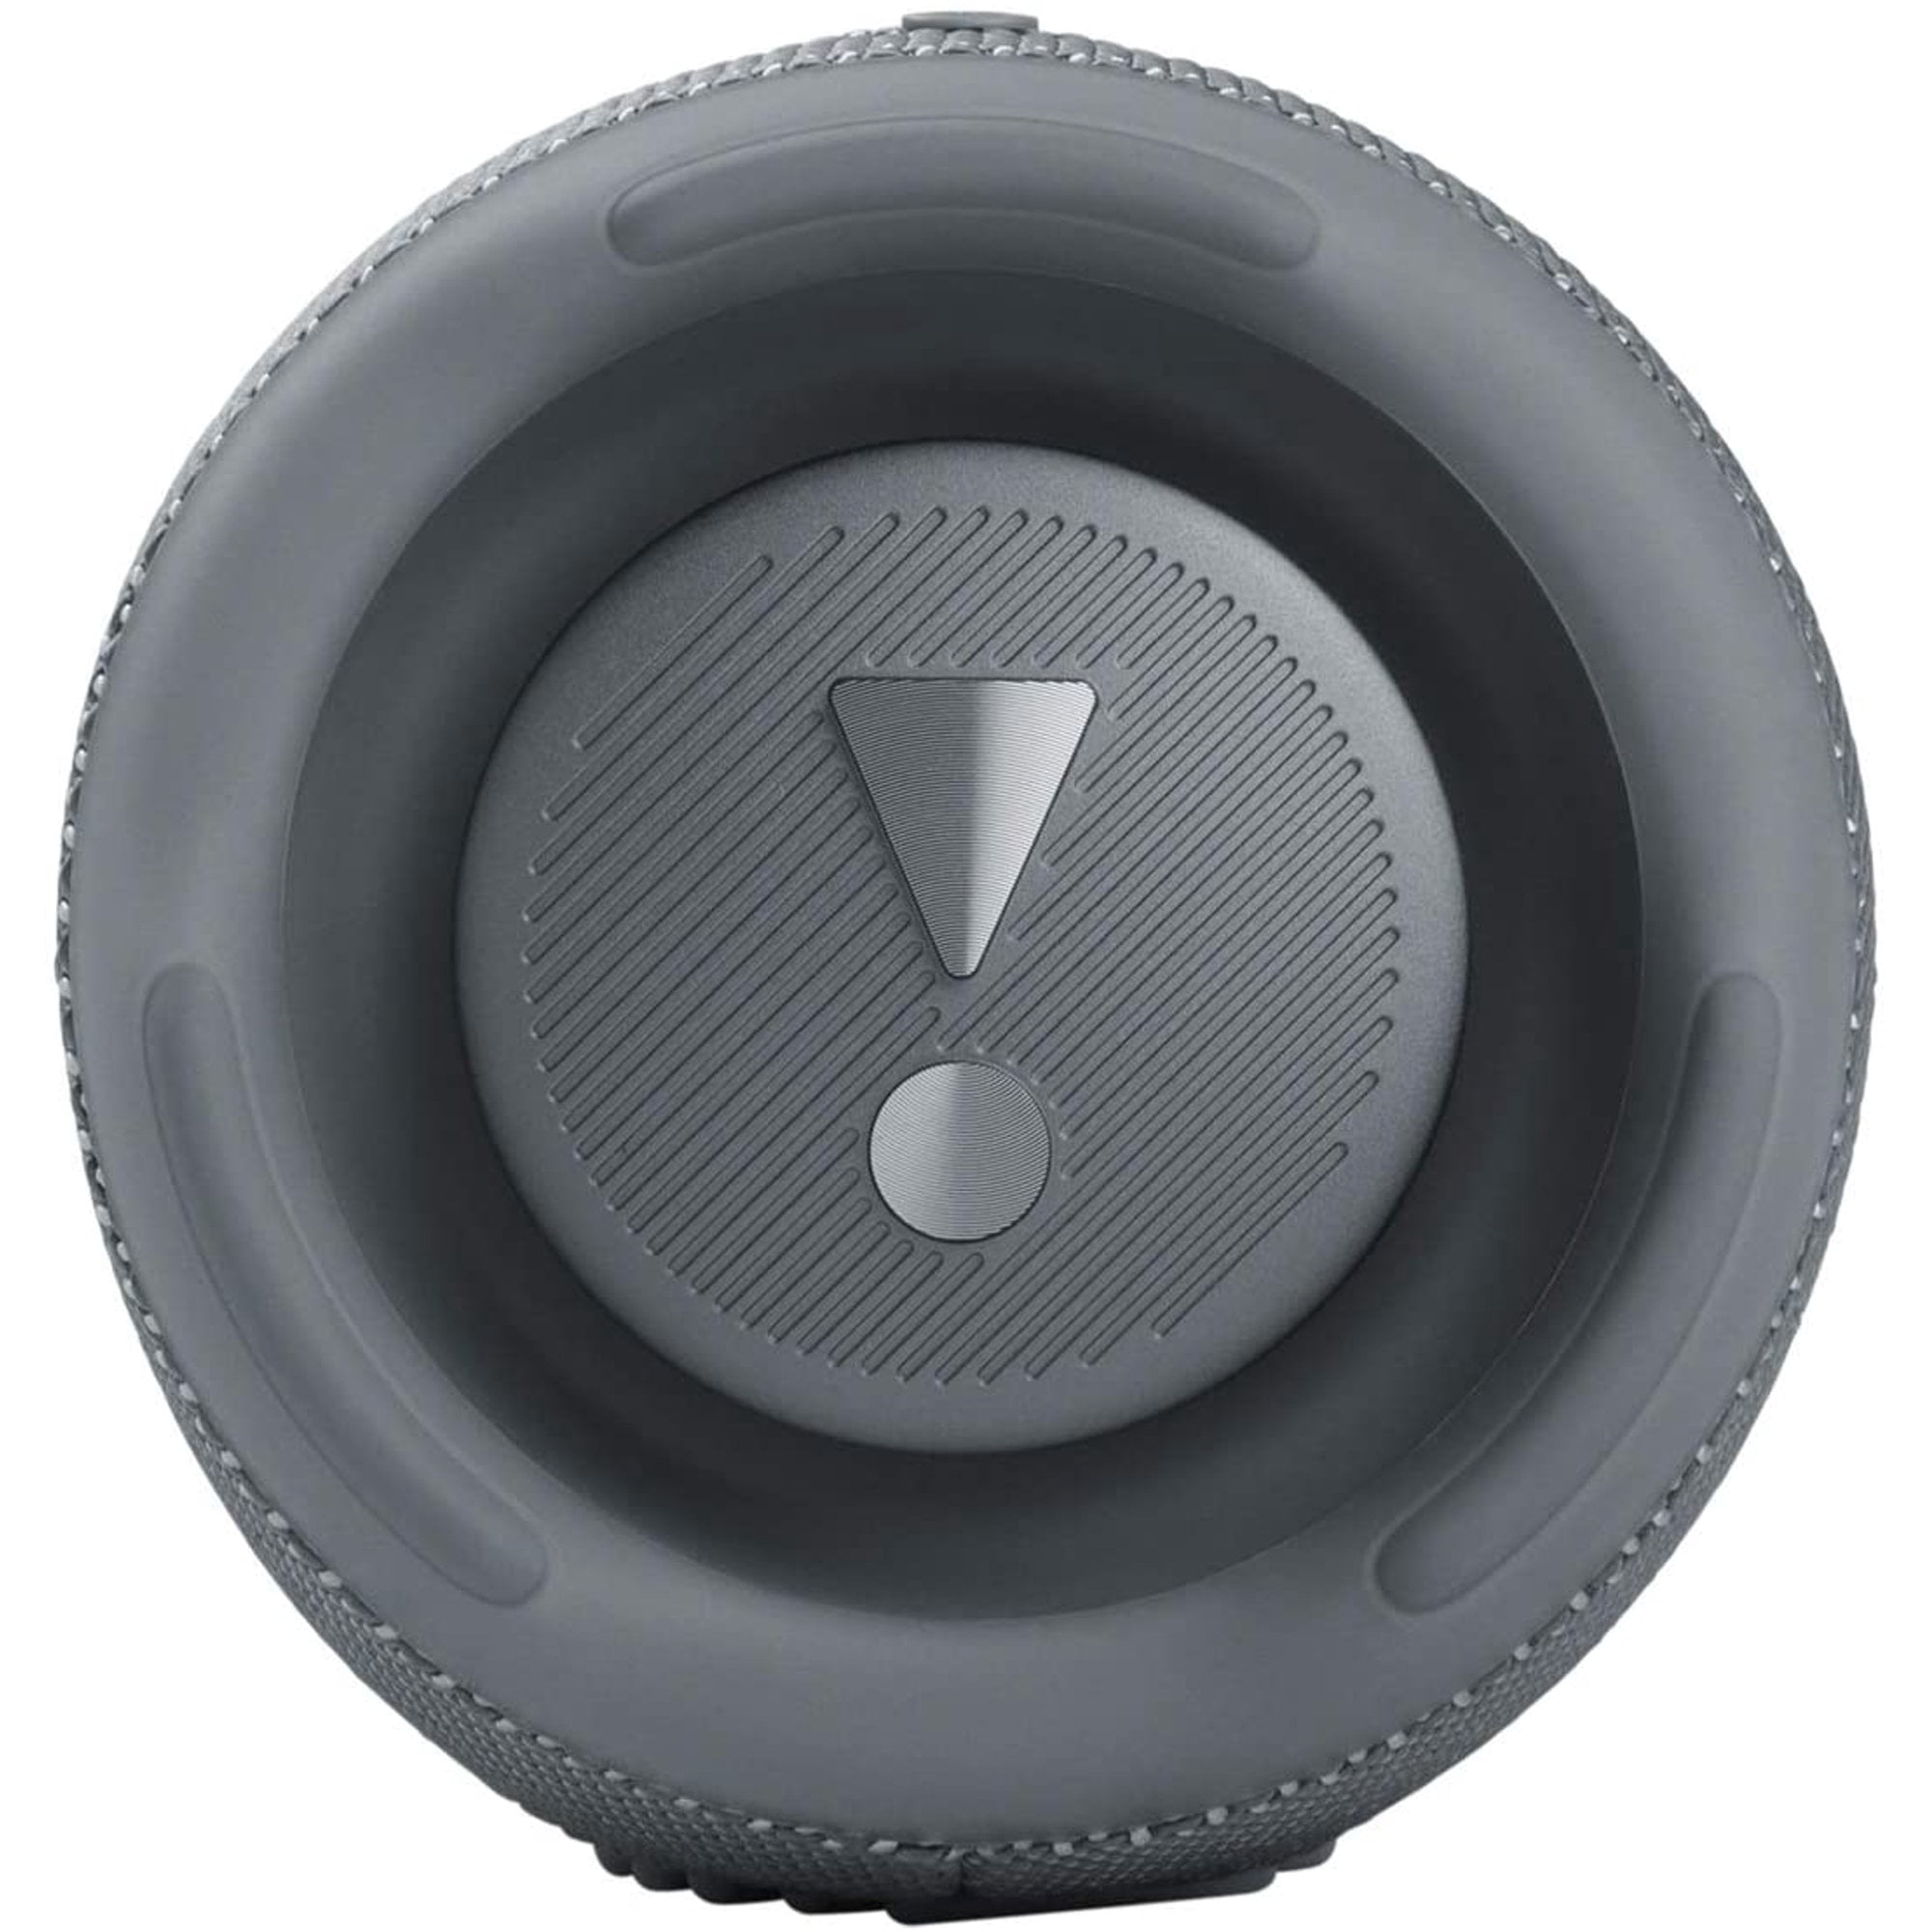 JBL Charge 5 Portable Waterproof Bluetooth Speaker - color gray